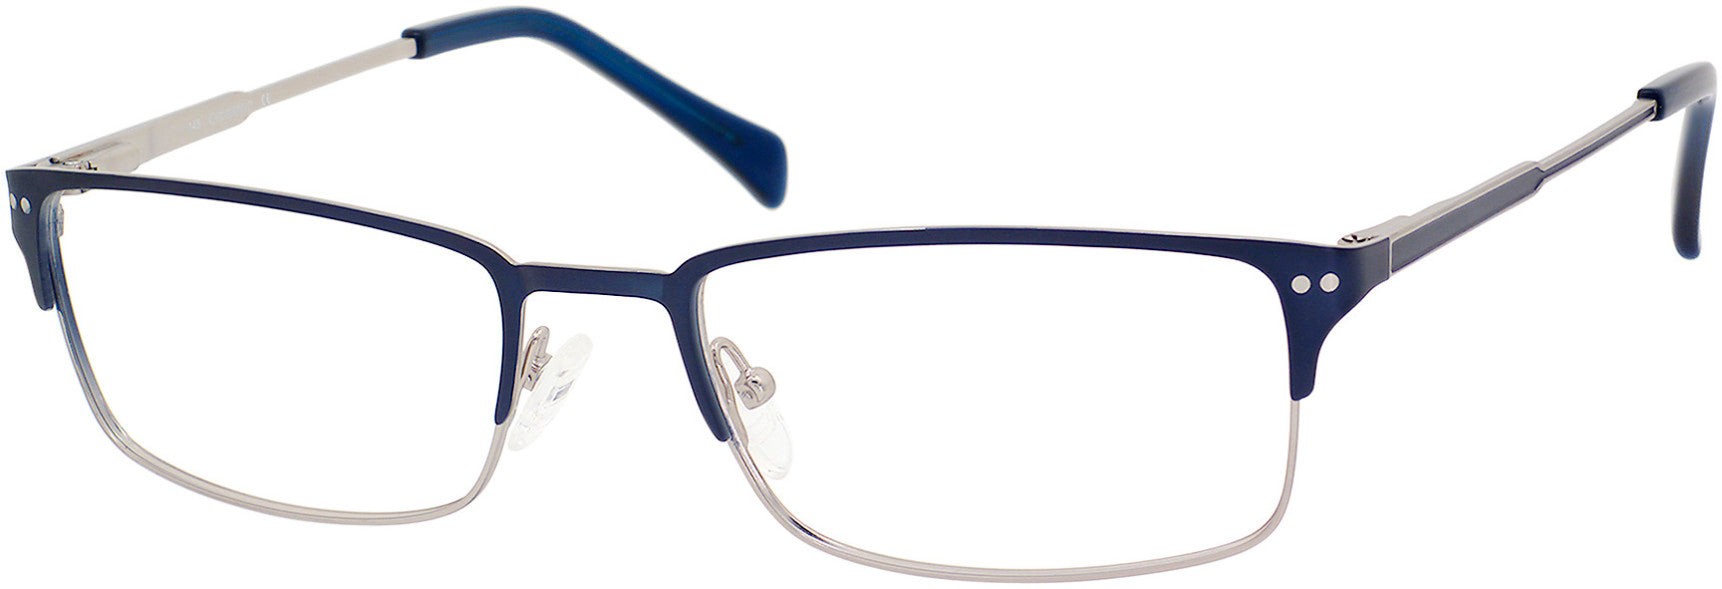  Chesterfield 17 XL Rectangular Eyeglasses 0RD4-0RD4  Navy (00 Demo Lens)